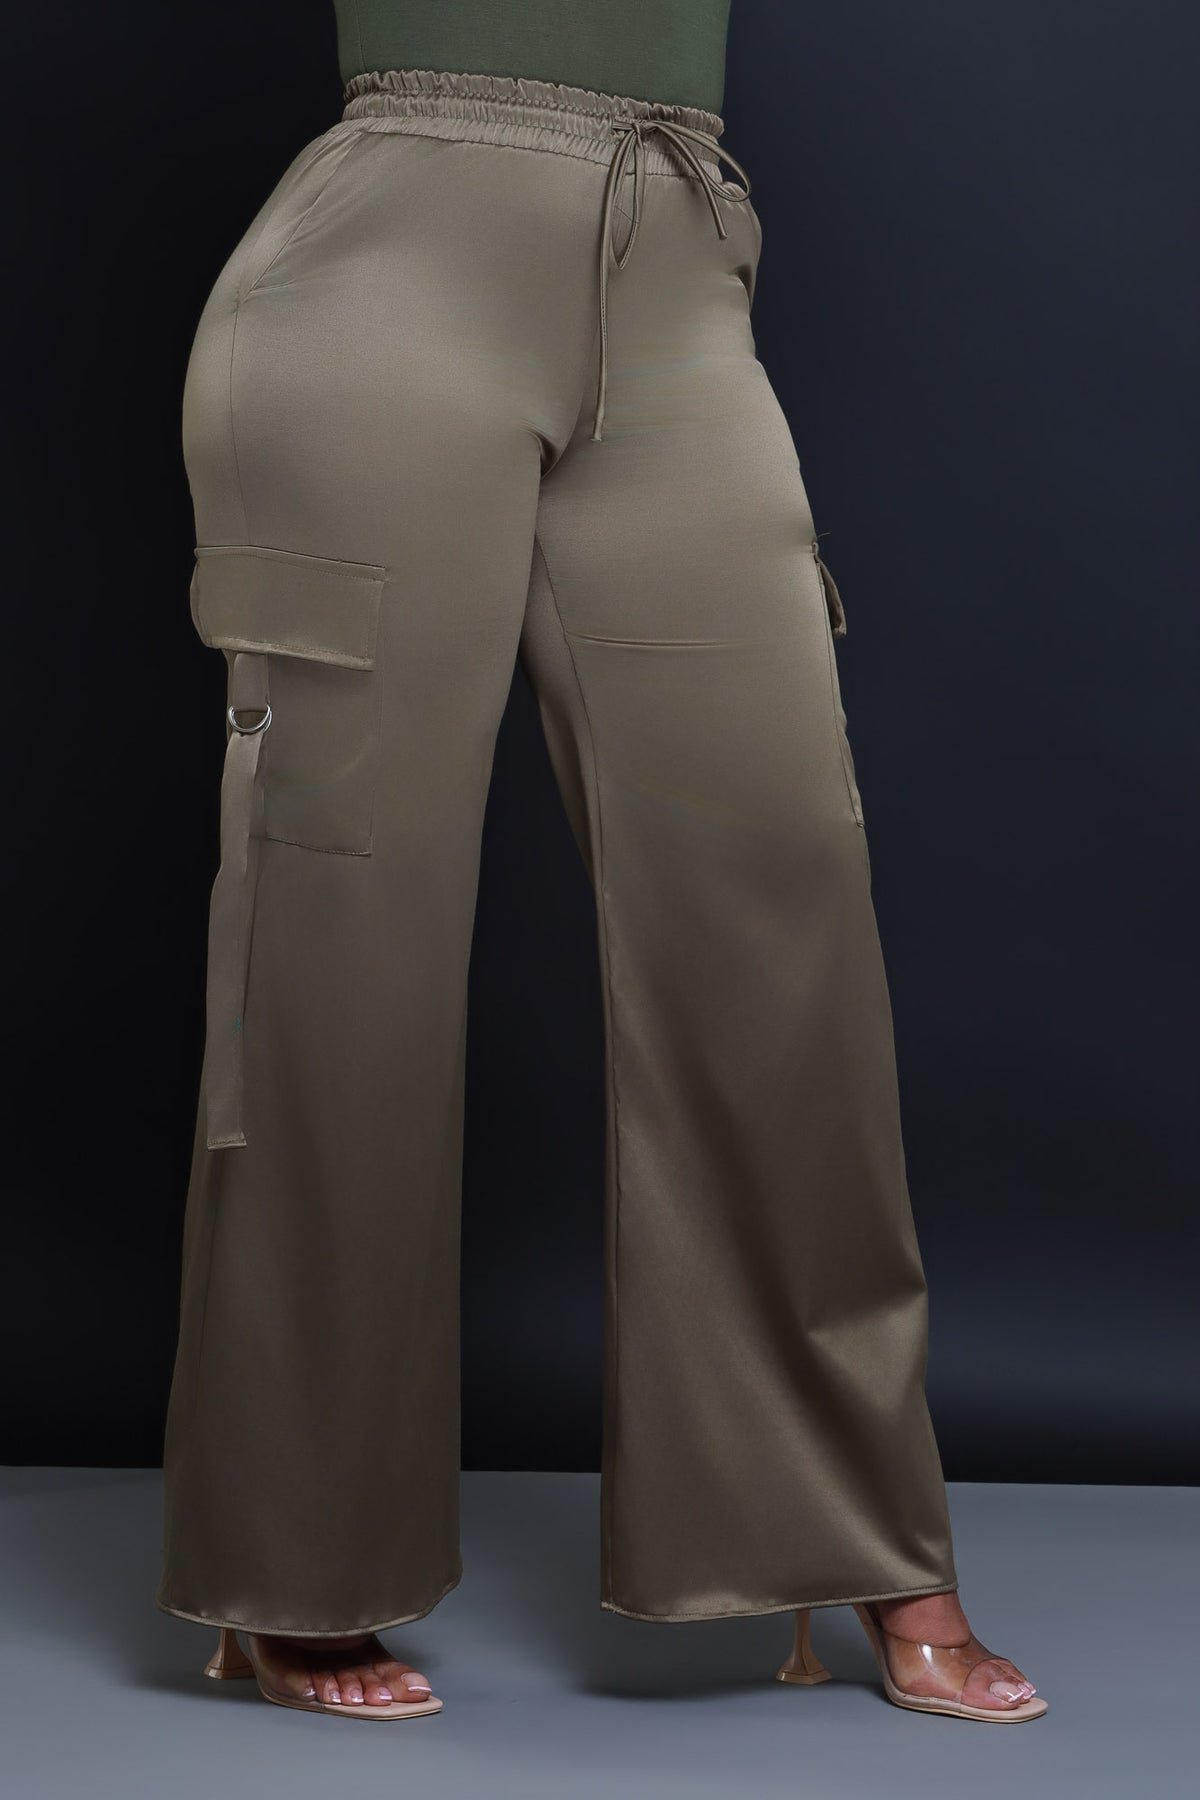 
              Satin Multi Pocket Long Cargo Pants - Olive - Swank A Posh
            